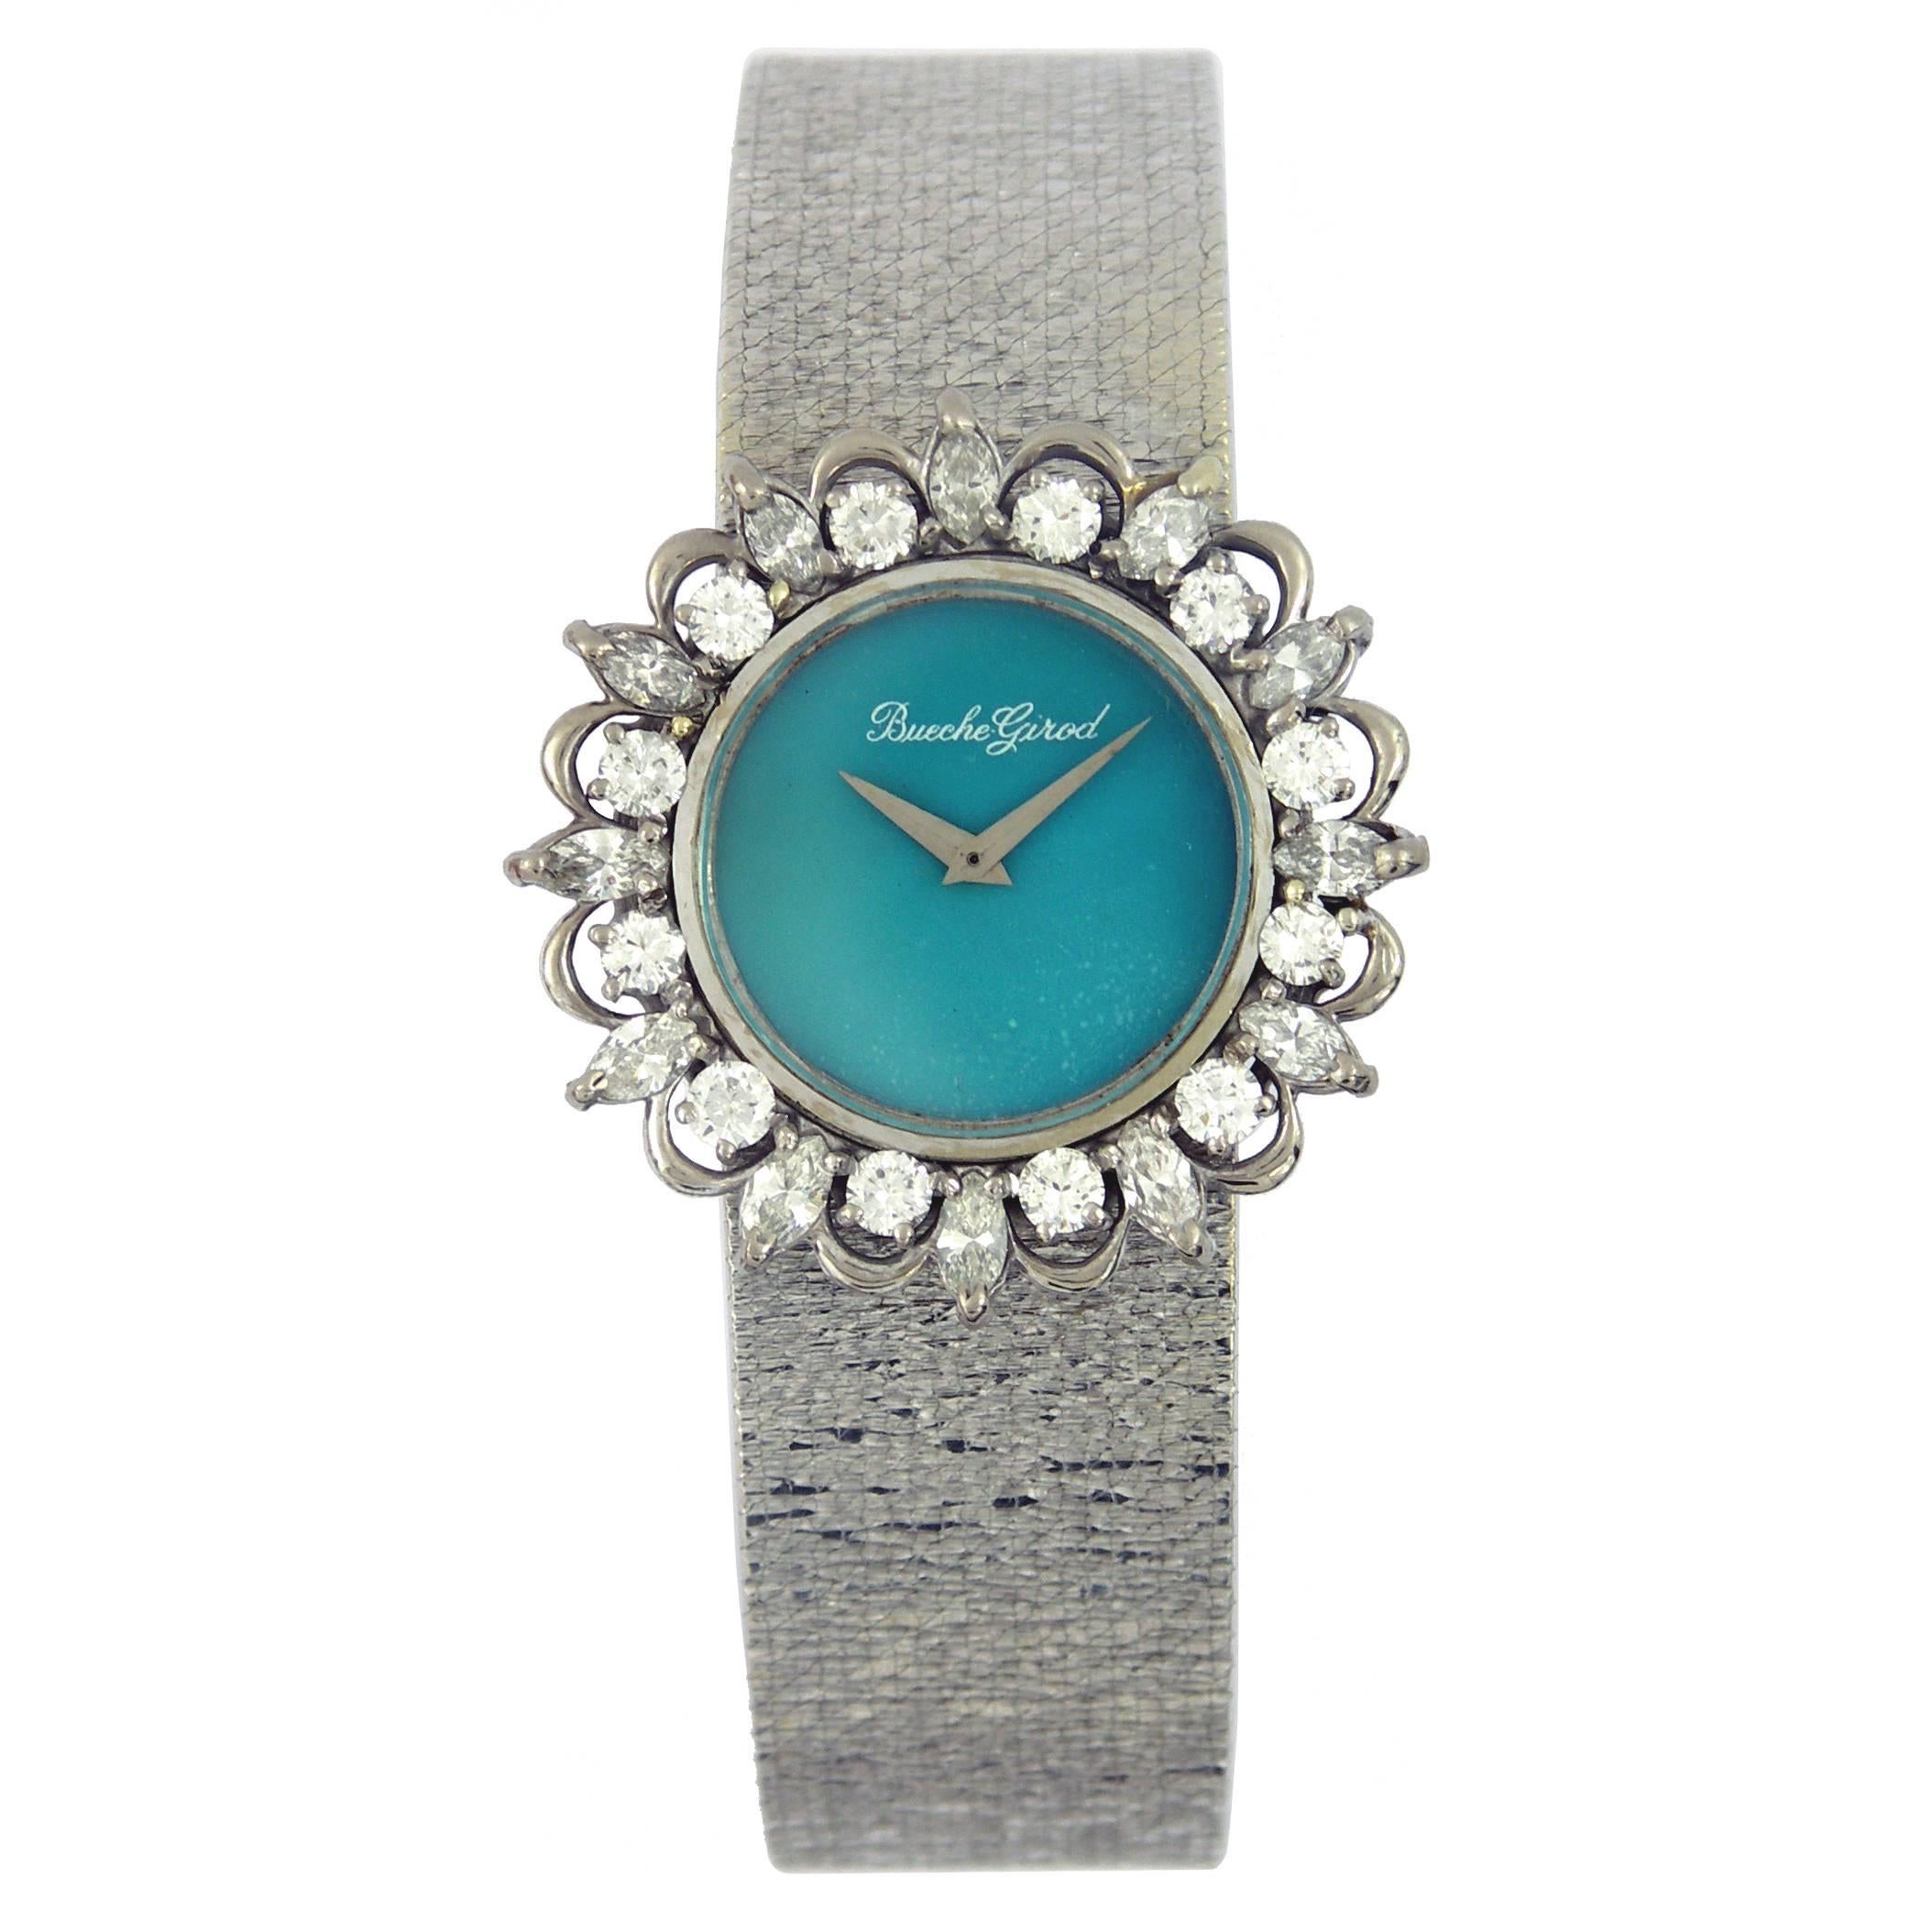 Bueche Girod Lady's White Gold Diamond Turquoise Dial Wristwatch